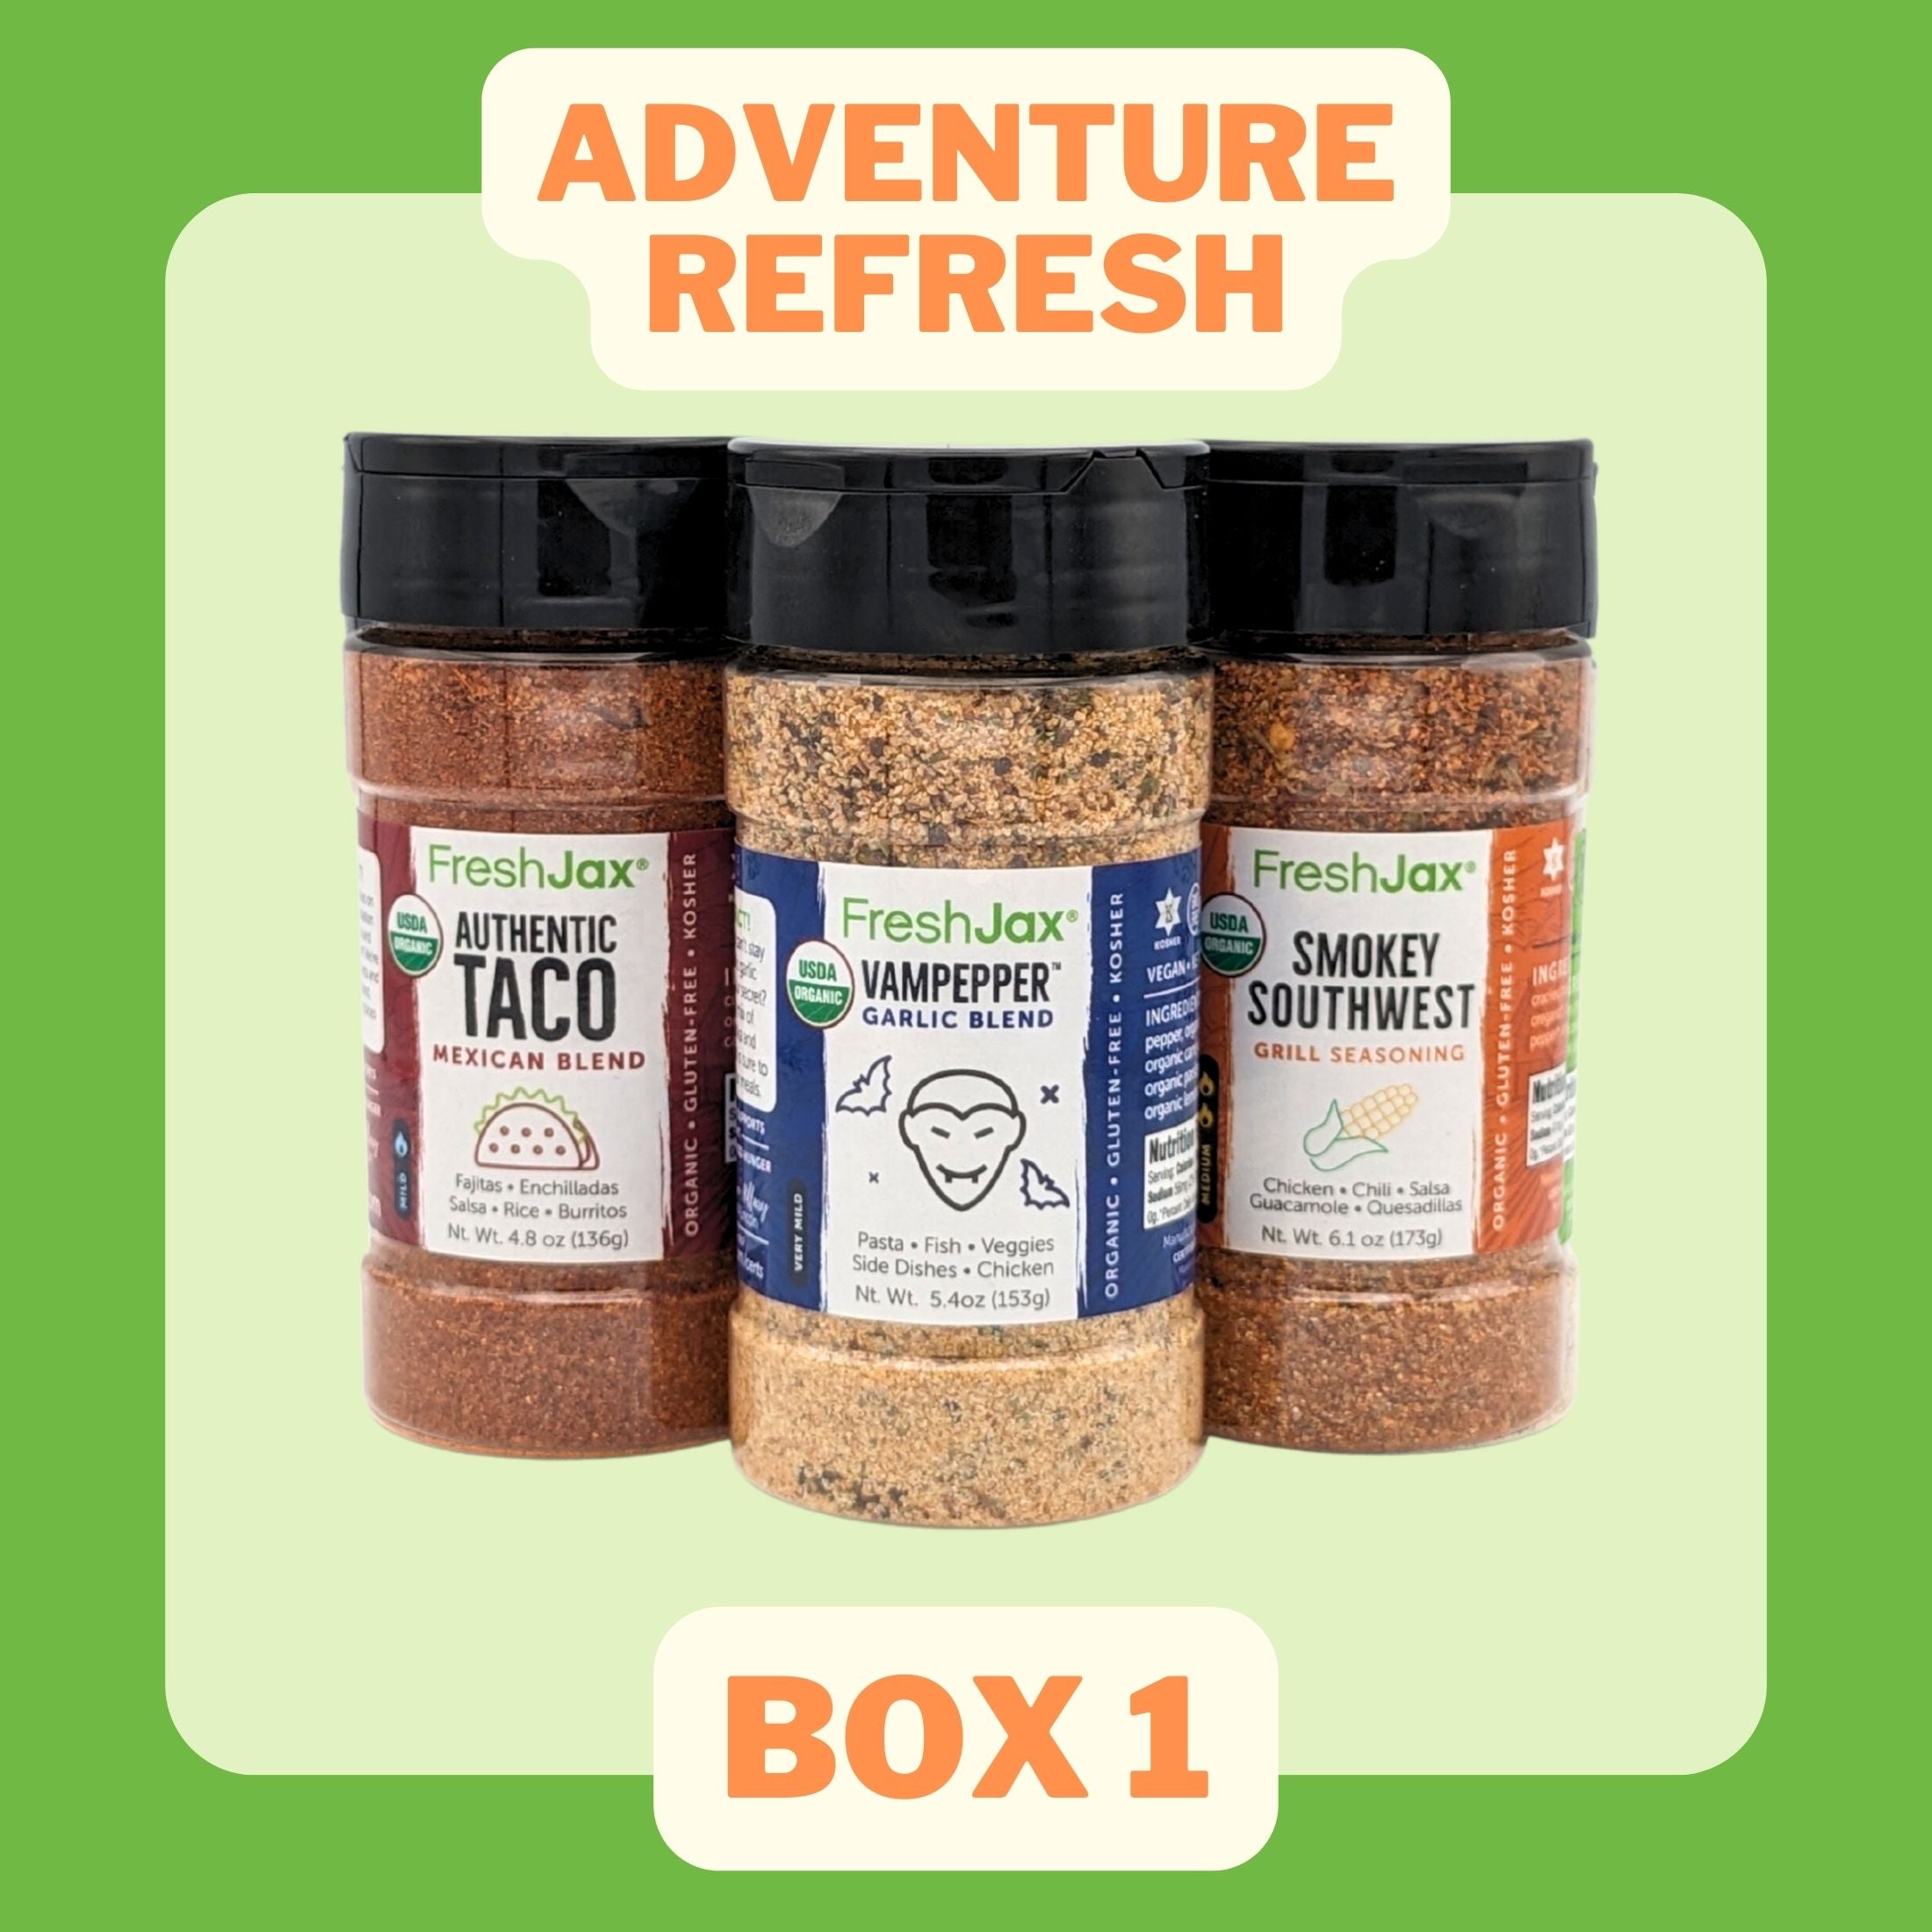 Adventure ReFresh Box 1 : Taco Seasoning, Vampepper Garlic Blend, Smokey Southwest